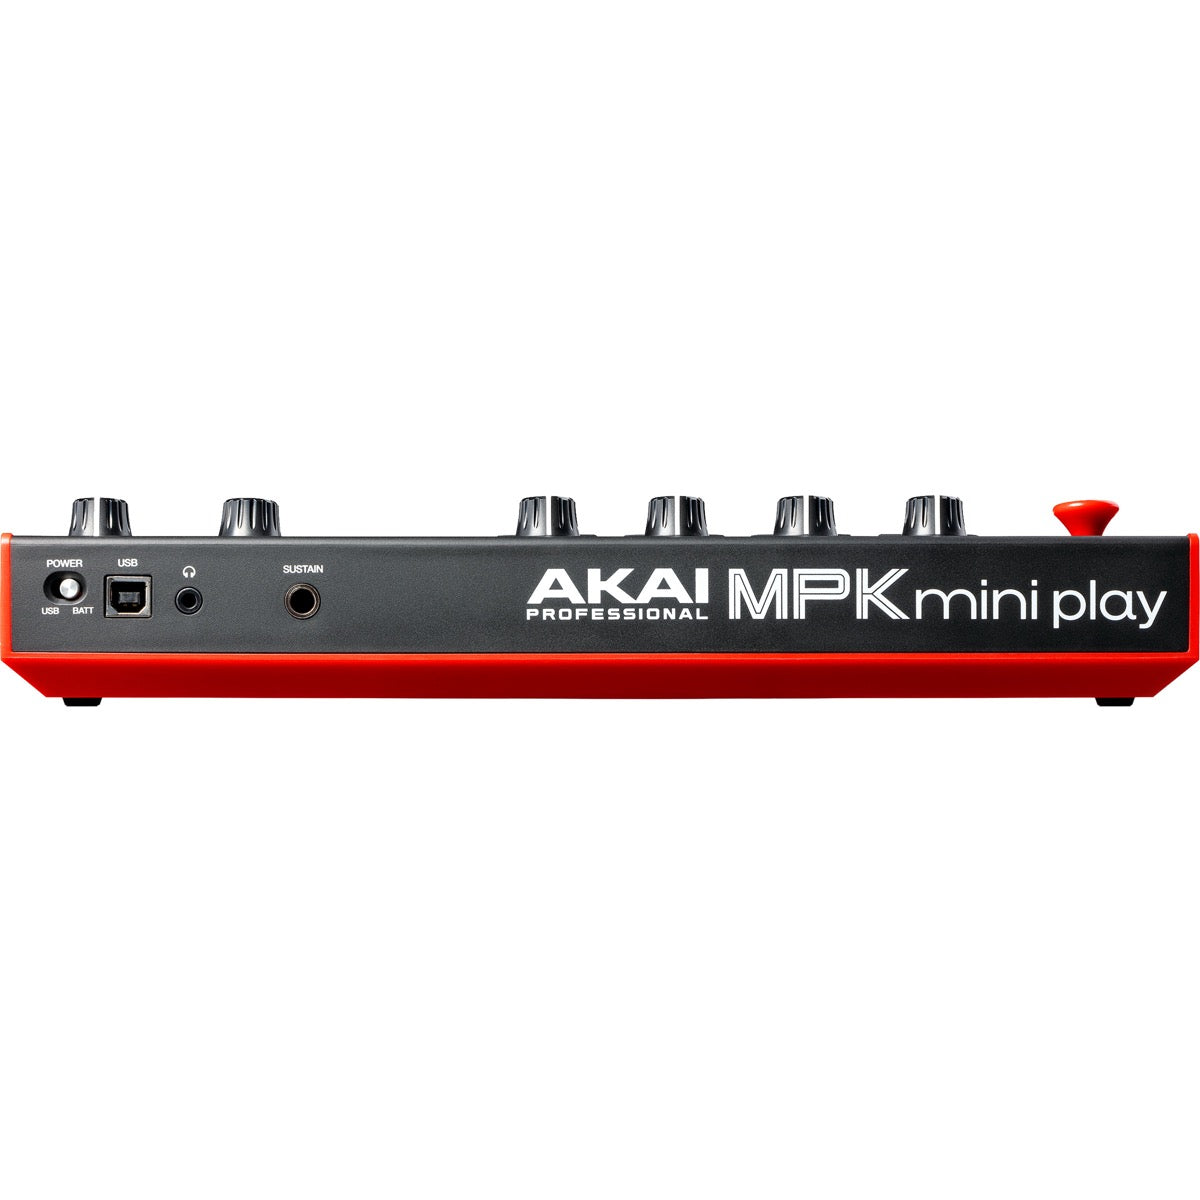 Akai Professional MPK Mini Play Mk3 Keyboard with Built-In Speaker View 2